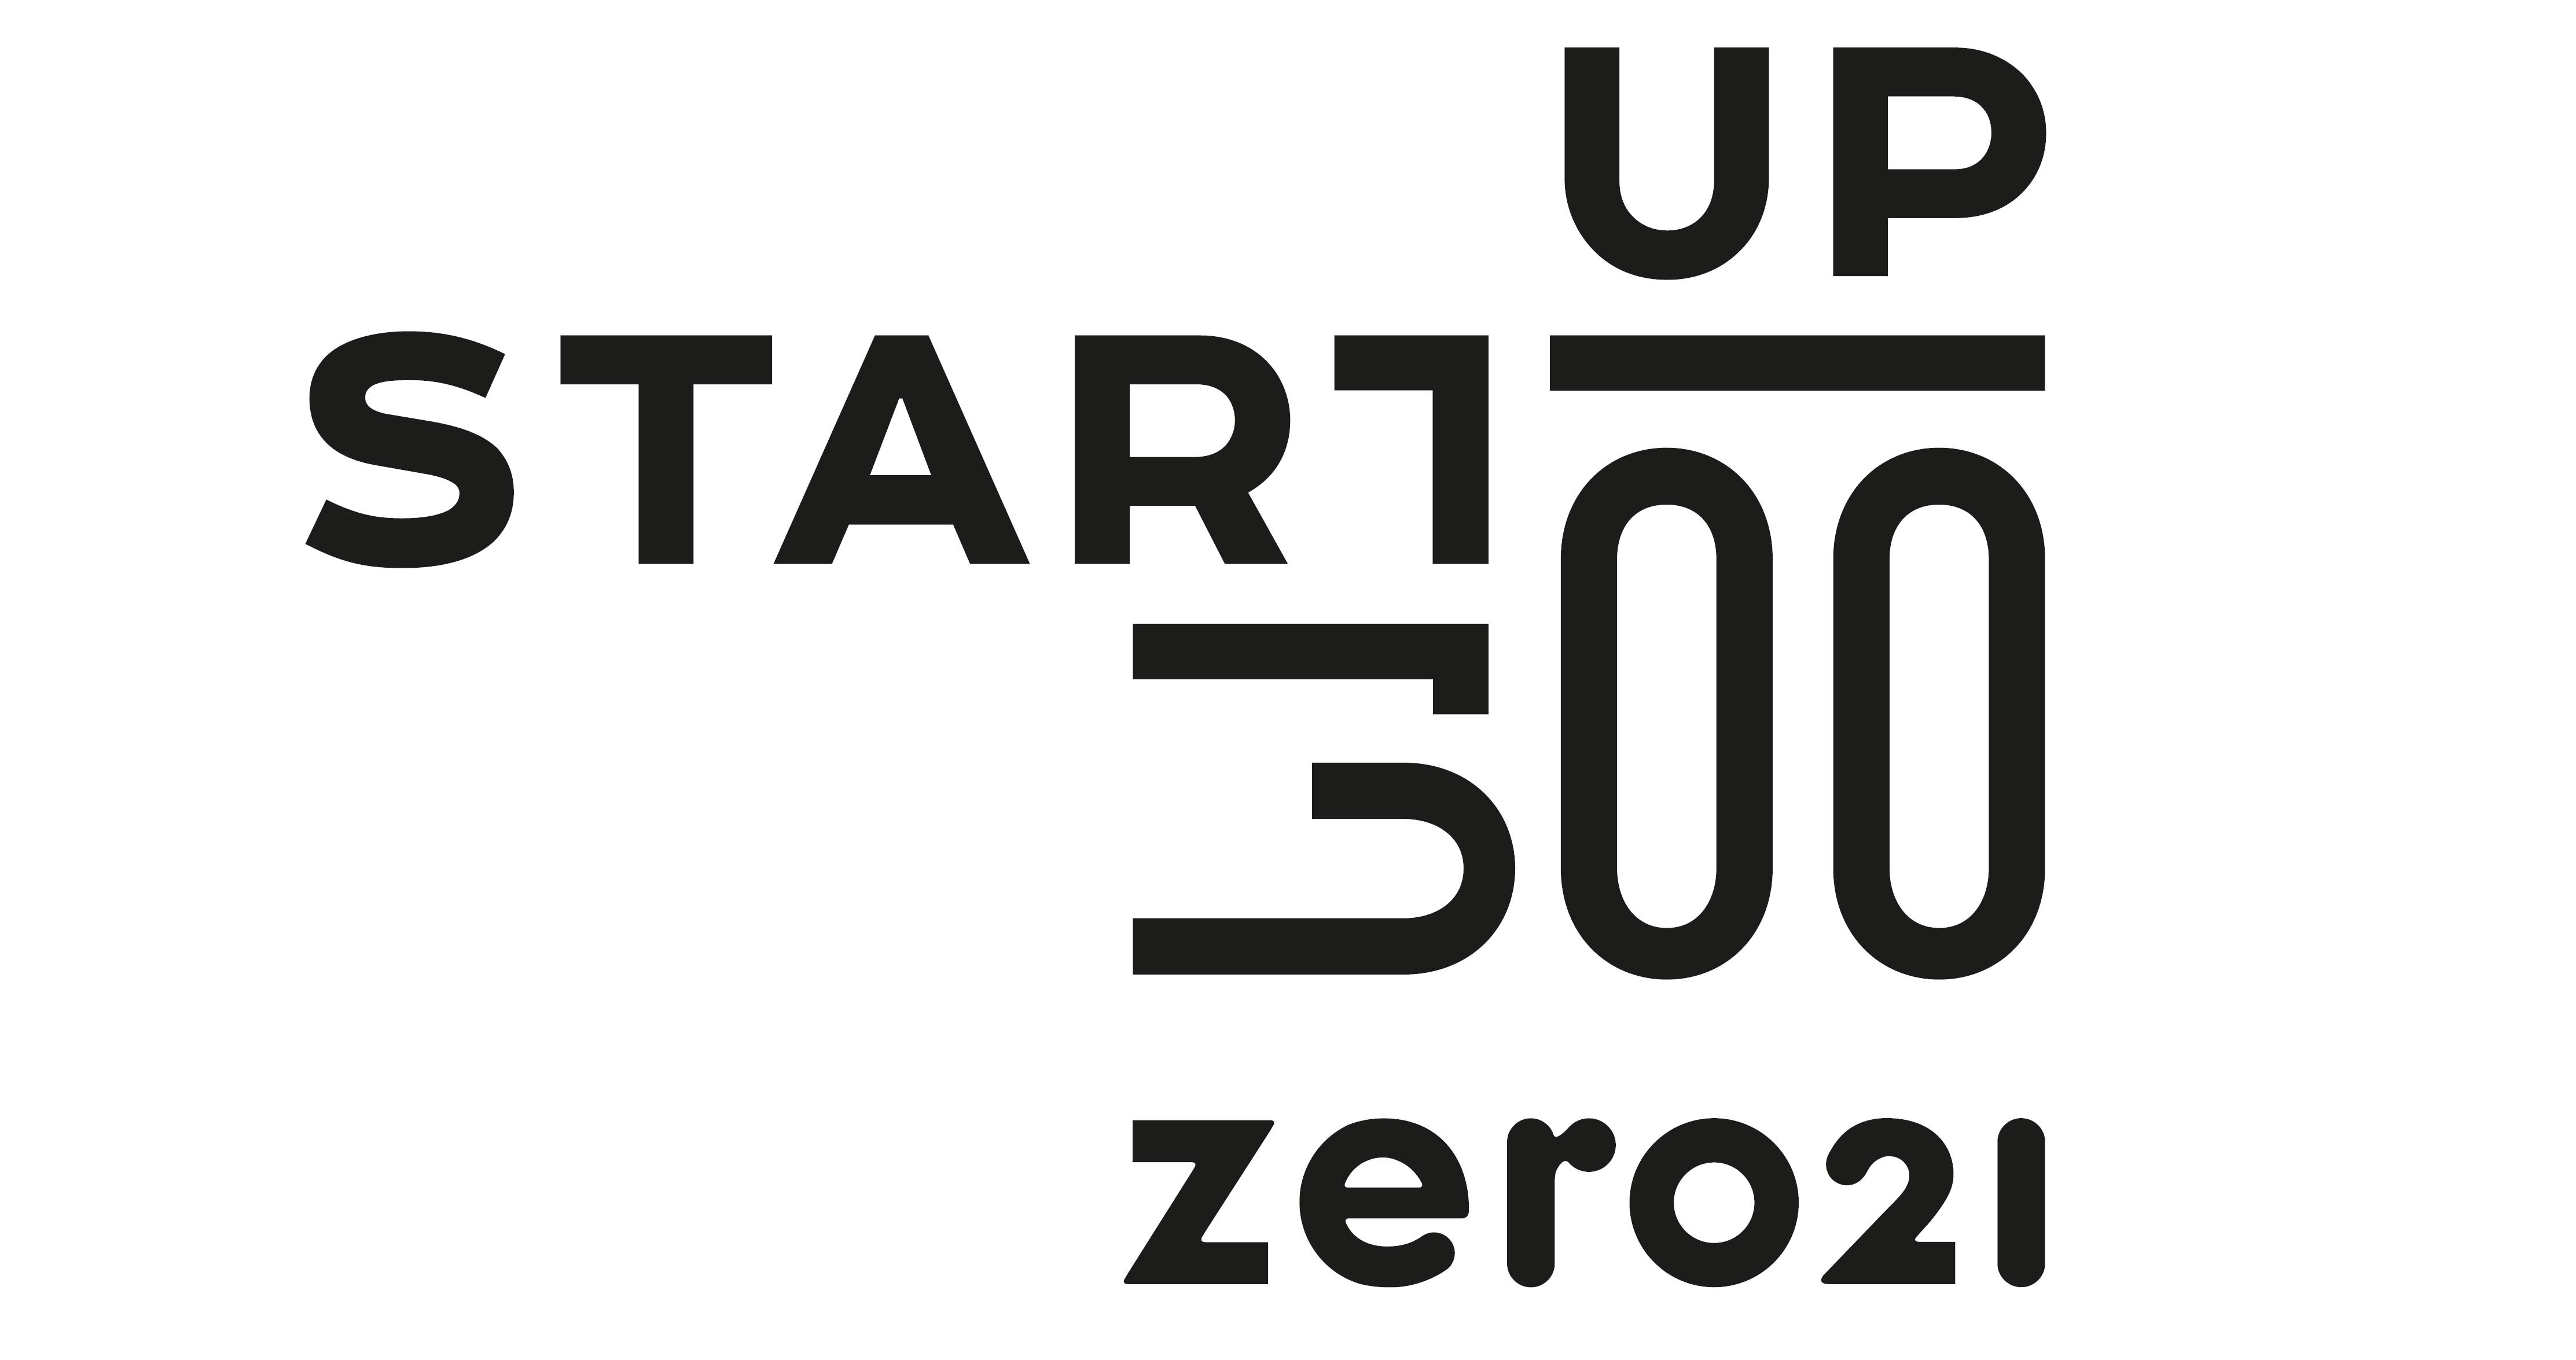 Startup 300